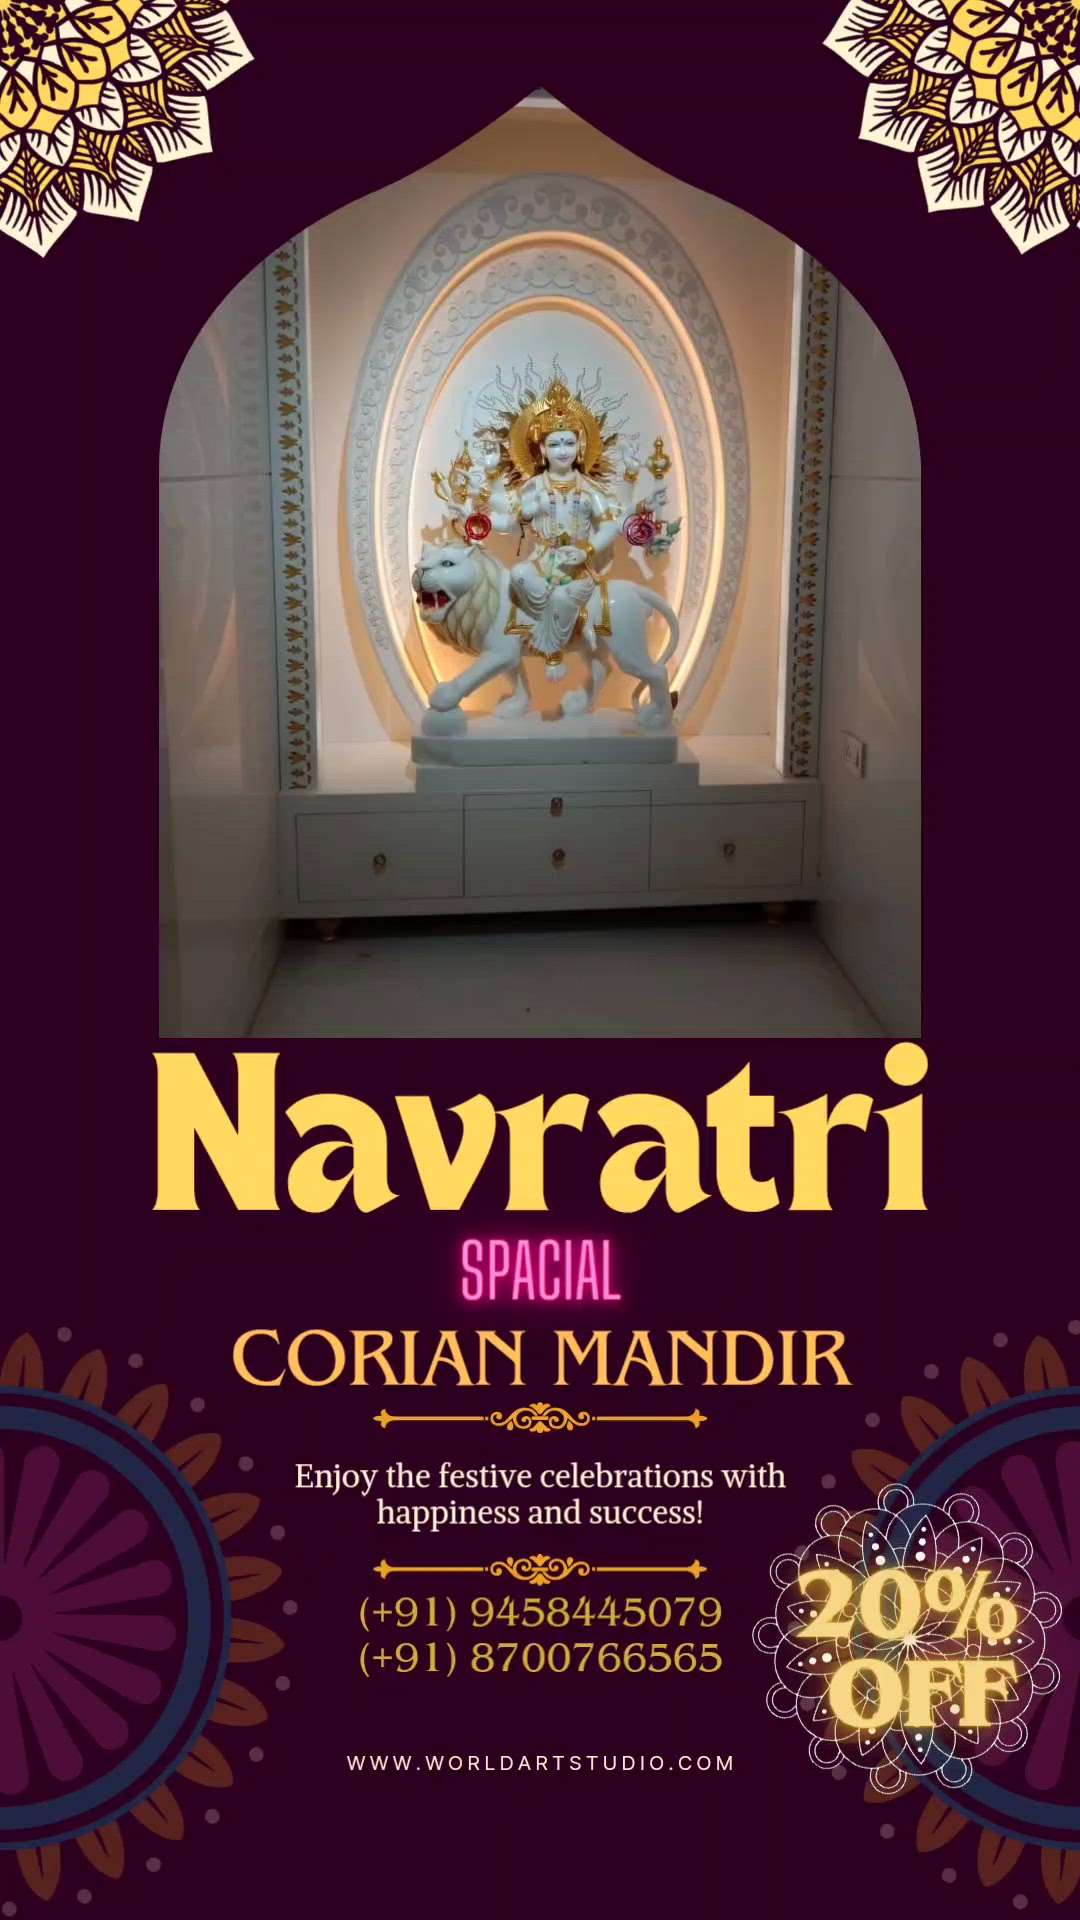 Navratri Spacial Offer Are Here.. Best Corian Mandir from The World Art Studio... And Get Free Delivery only in Delhi Ncr 📍Or 20% Off On Any Corian Mandir....
.
.
Location - 95/2 kirti nagar furniture block nearby kotak Mahindra bank Delhi 110015.
.
.
Contact us- (+91) 9458445079 , (+91) 8700766565

VISIT OUR WEBSITE- WWW.WORLDARTSTUDIO.COM

#coriantemple #coriandesign #CorianMandir #explore #reels #navratrispecial #mataranireels #marbletemple #trending #explorepage✨